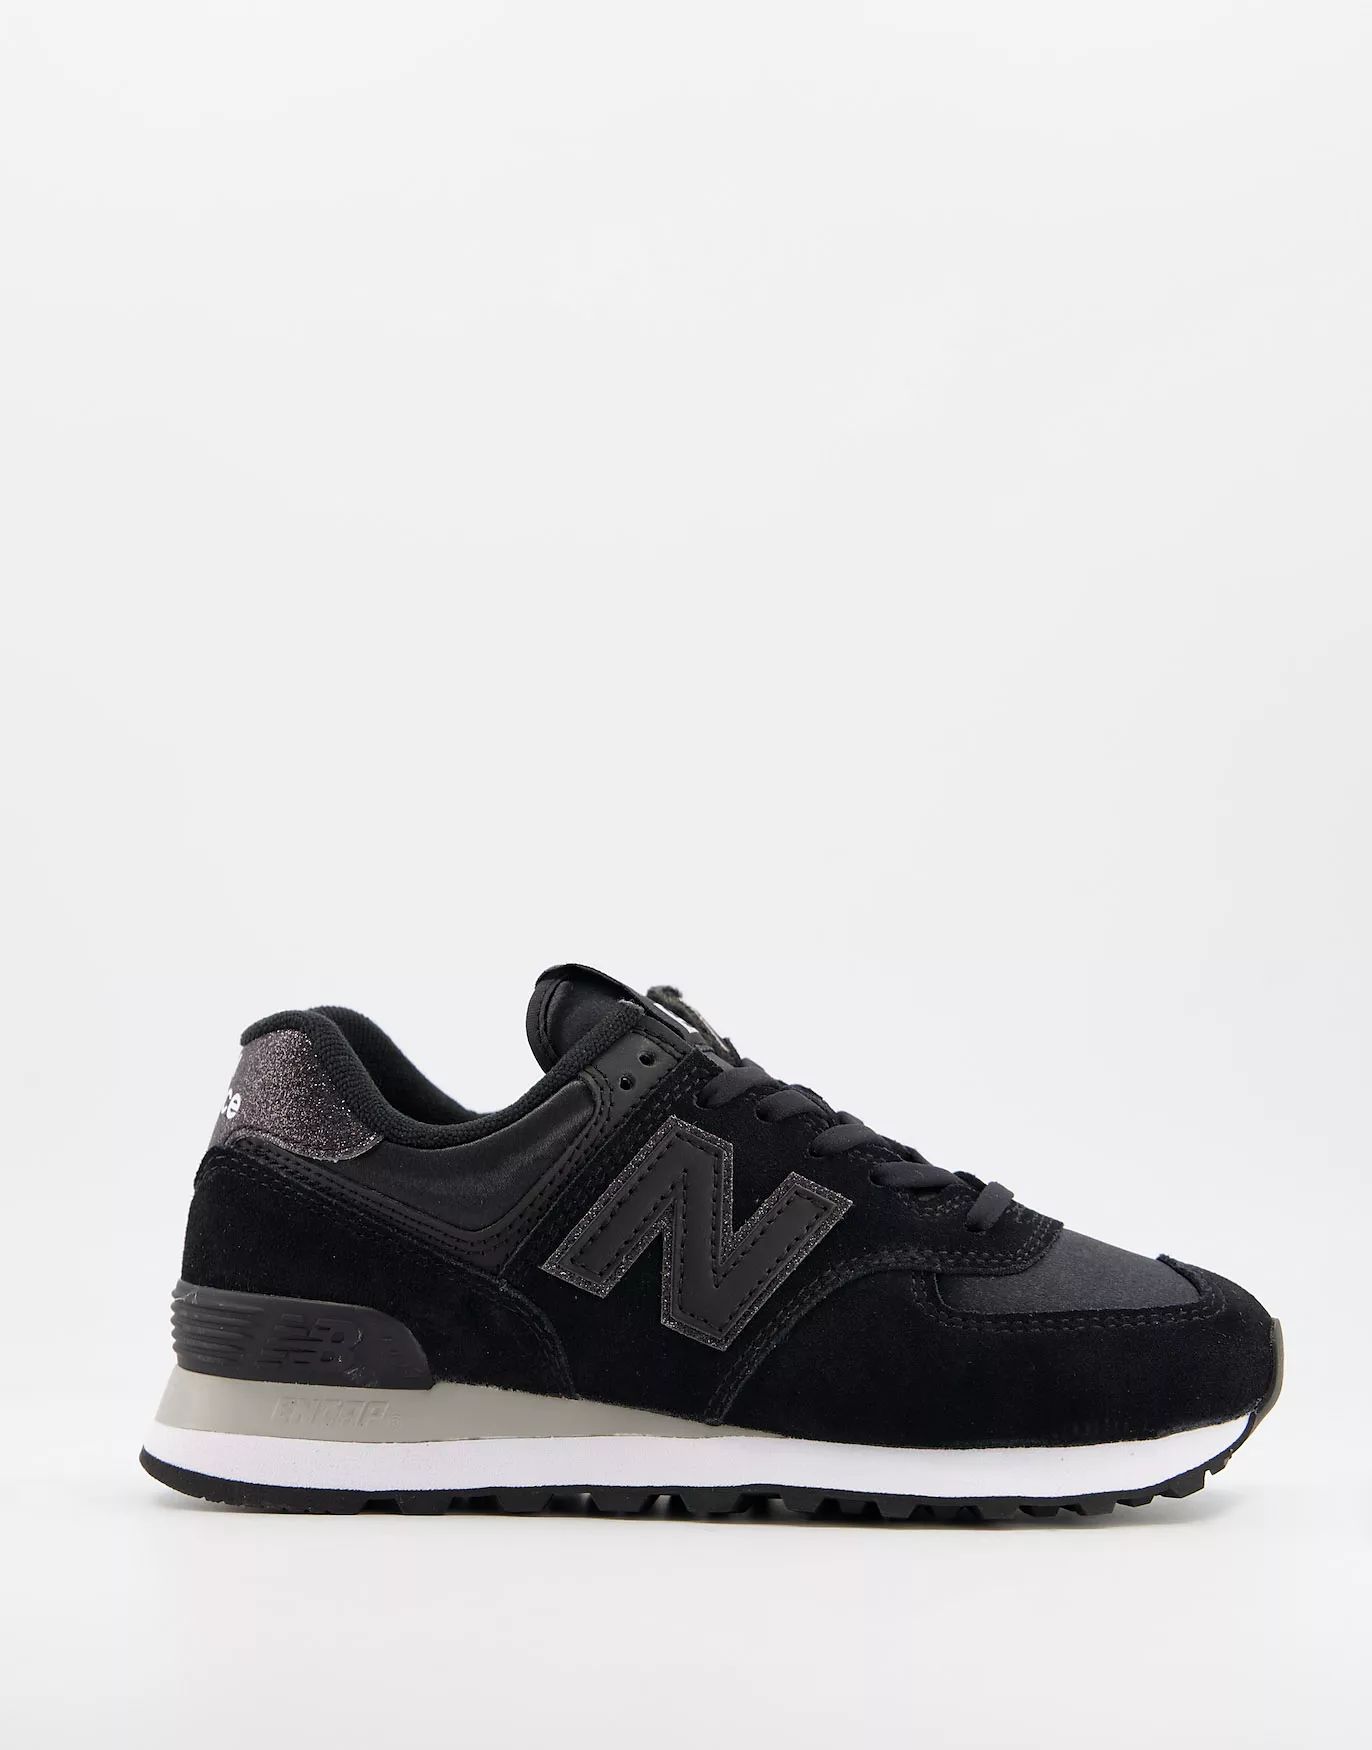 New Balance 574 sneakers in black | ASOS (Global)